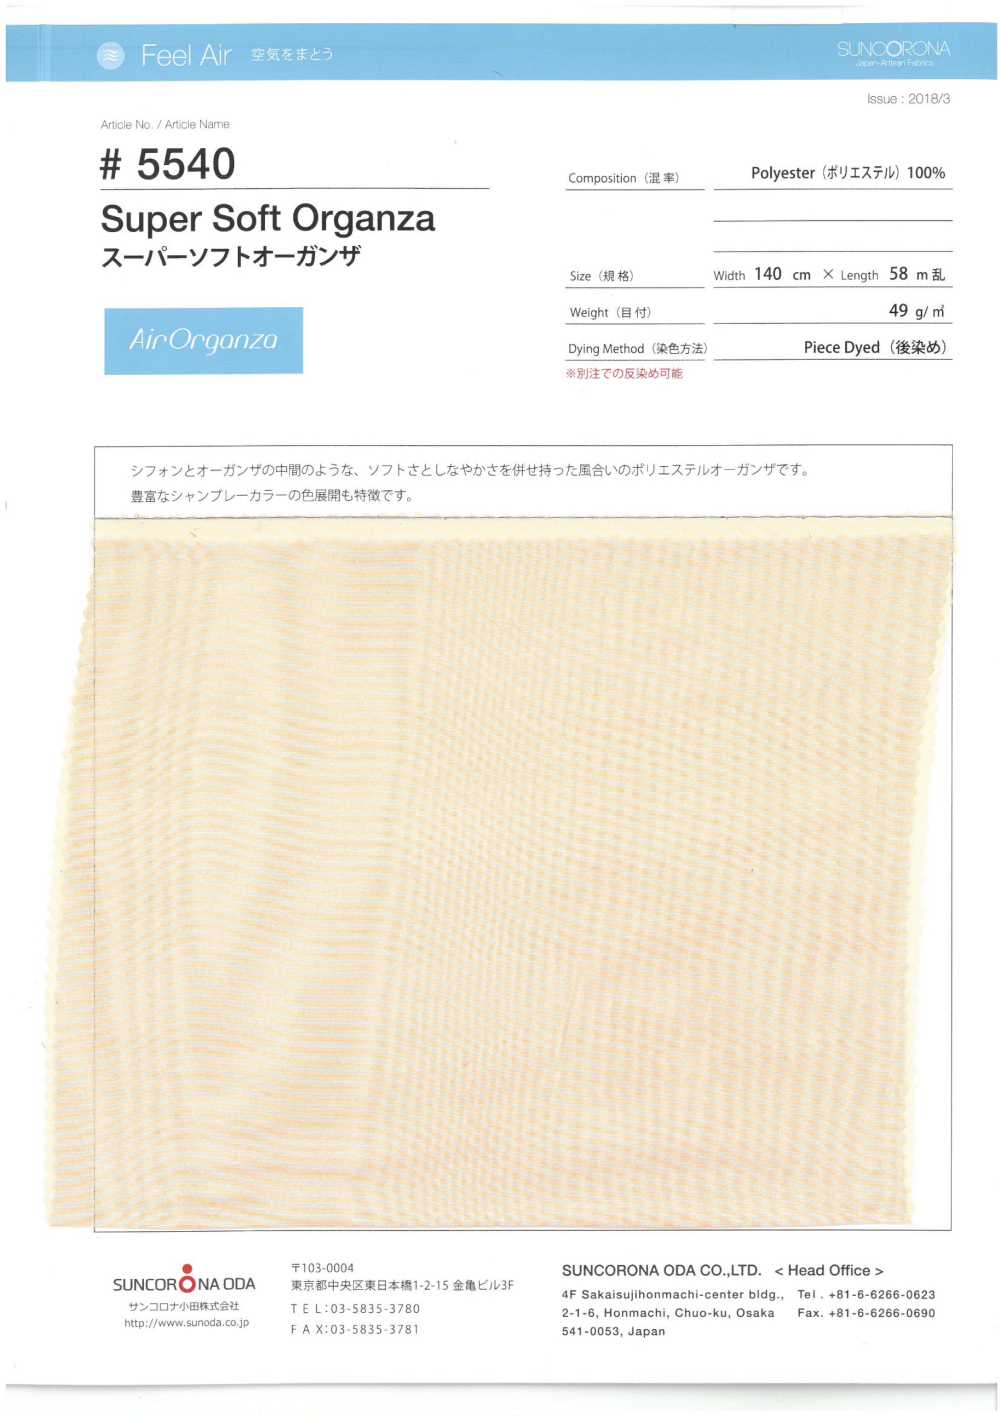 5540 Super Soft Organdy[Textile / Fabric] Suncorona Oda